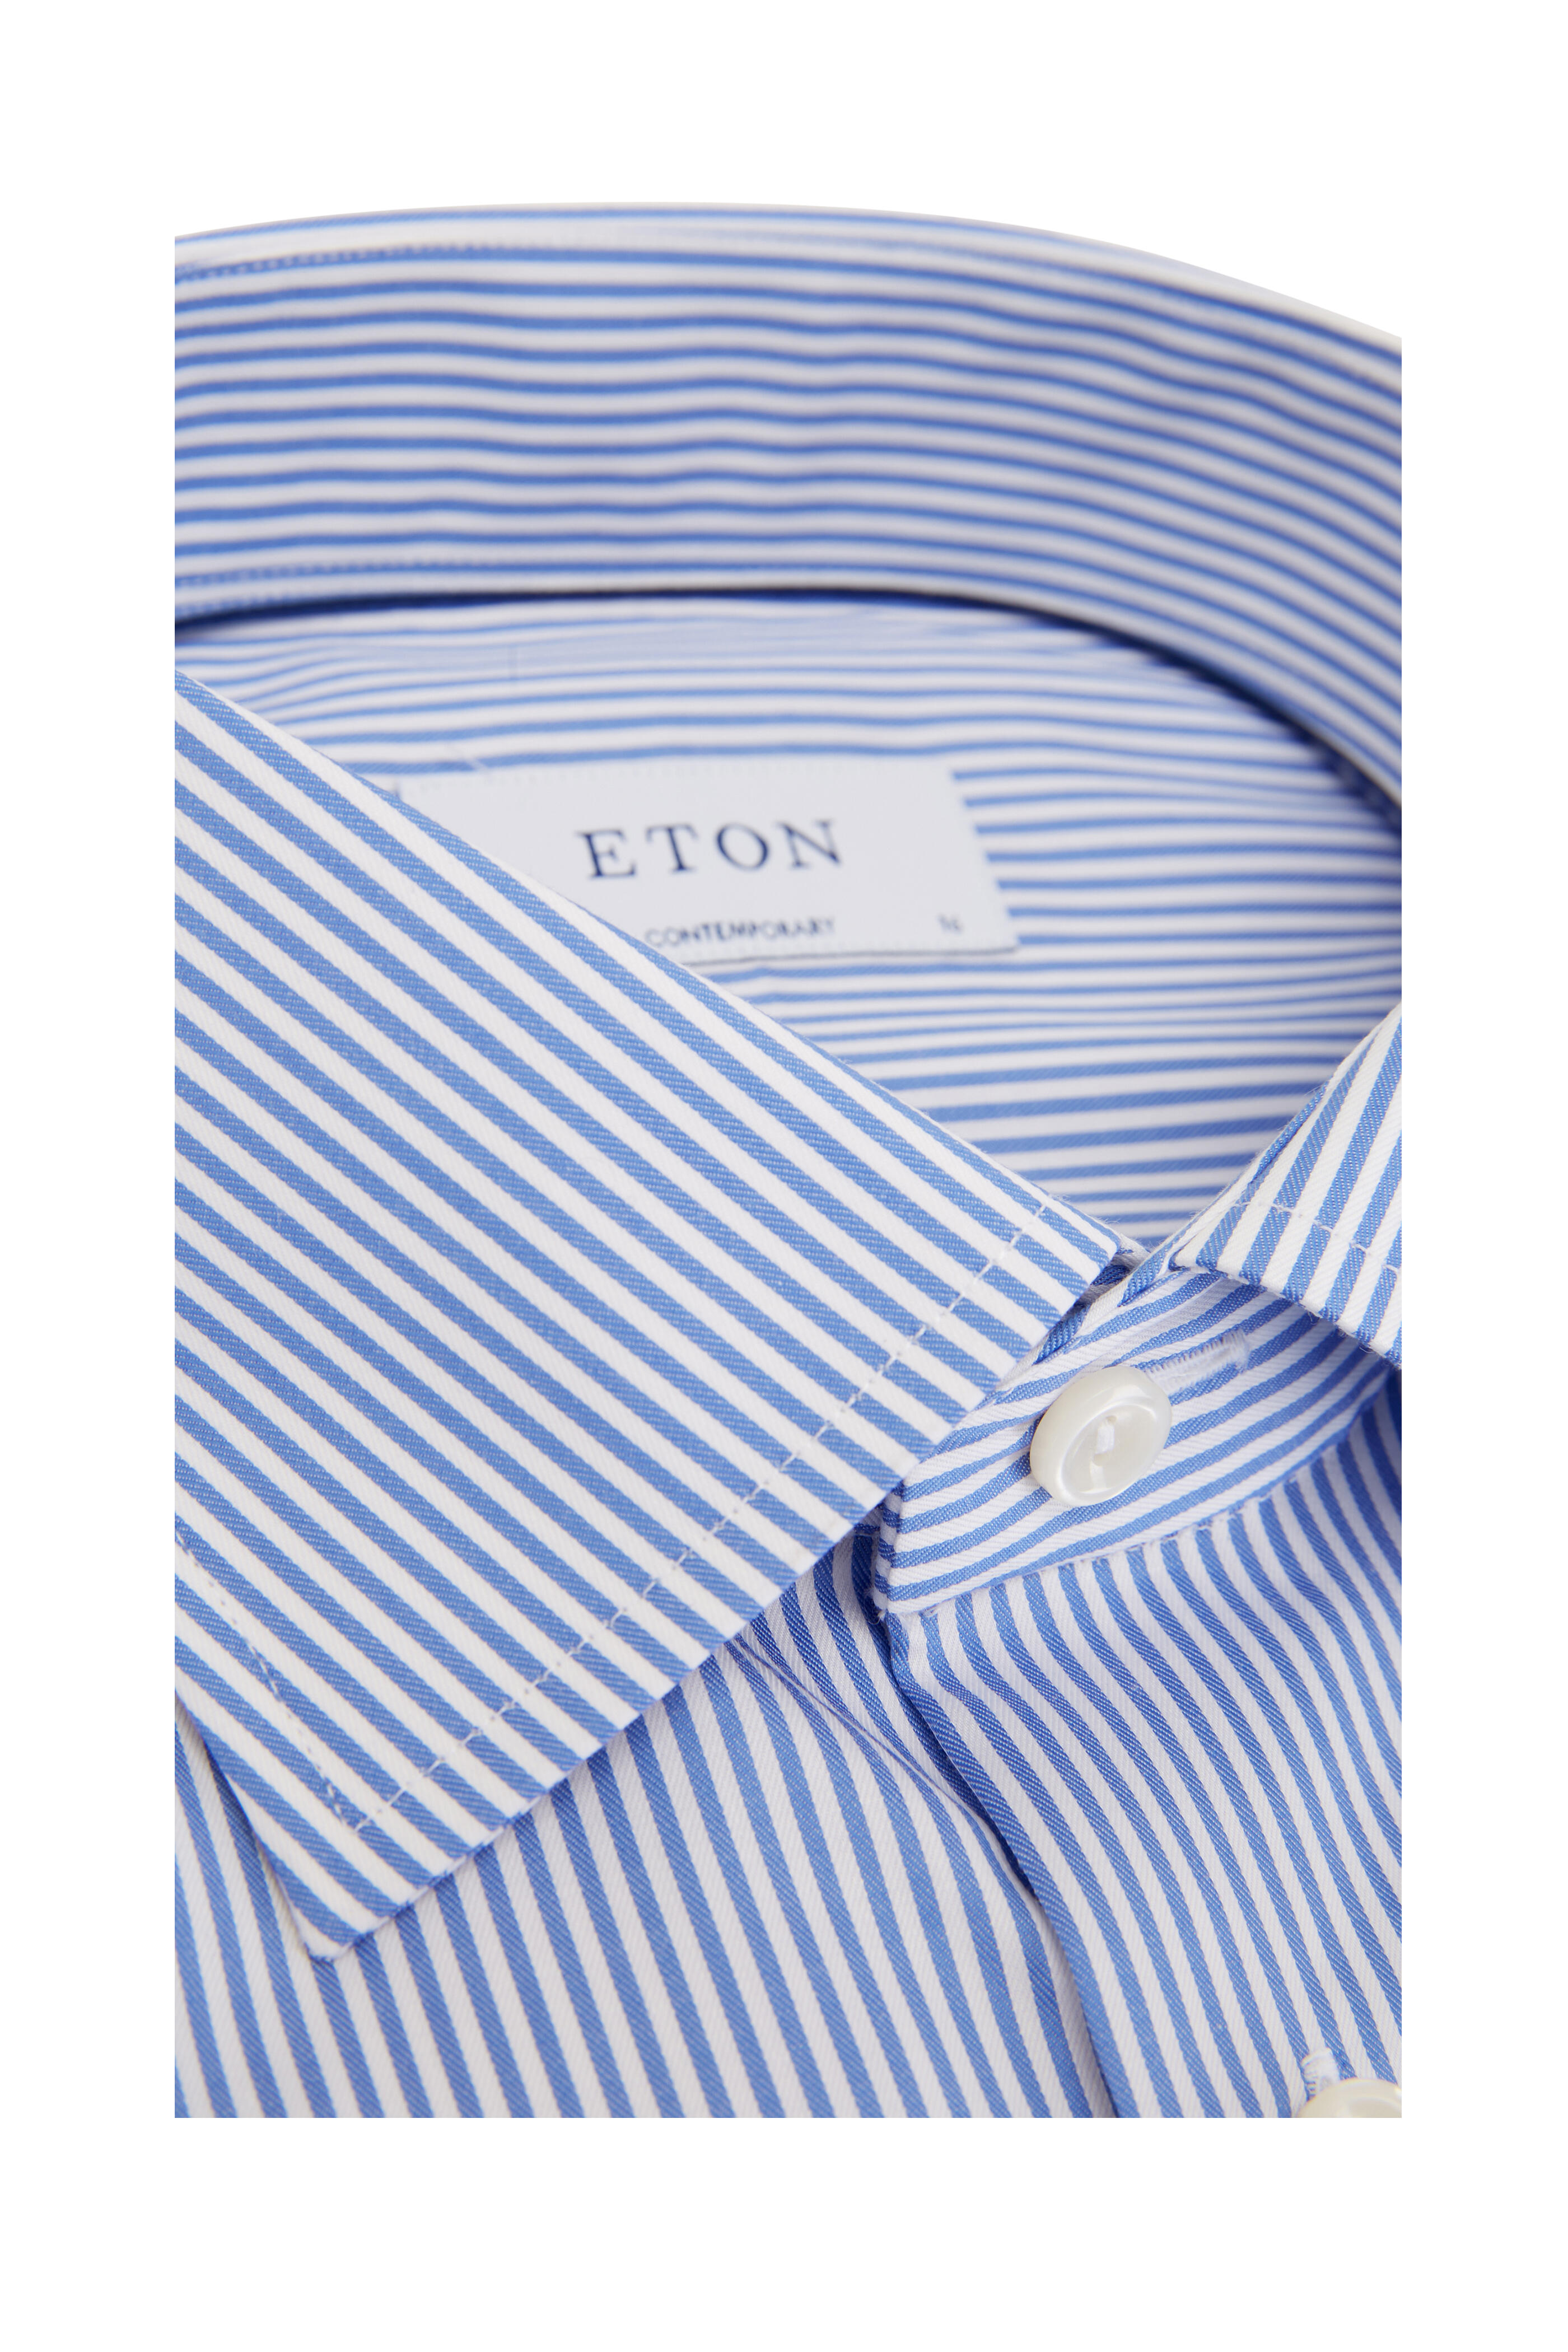 Eton - Royal Blue Stripe Dress Shirt | Mitchell Stores